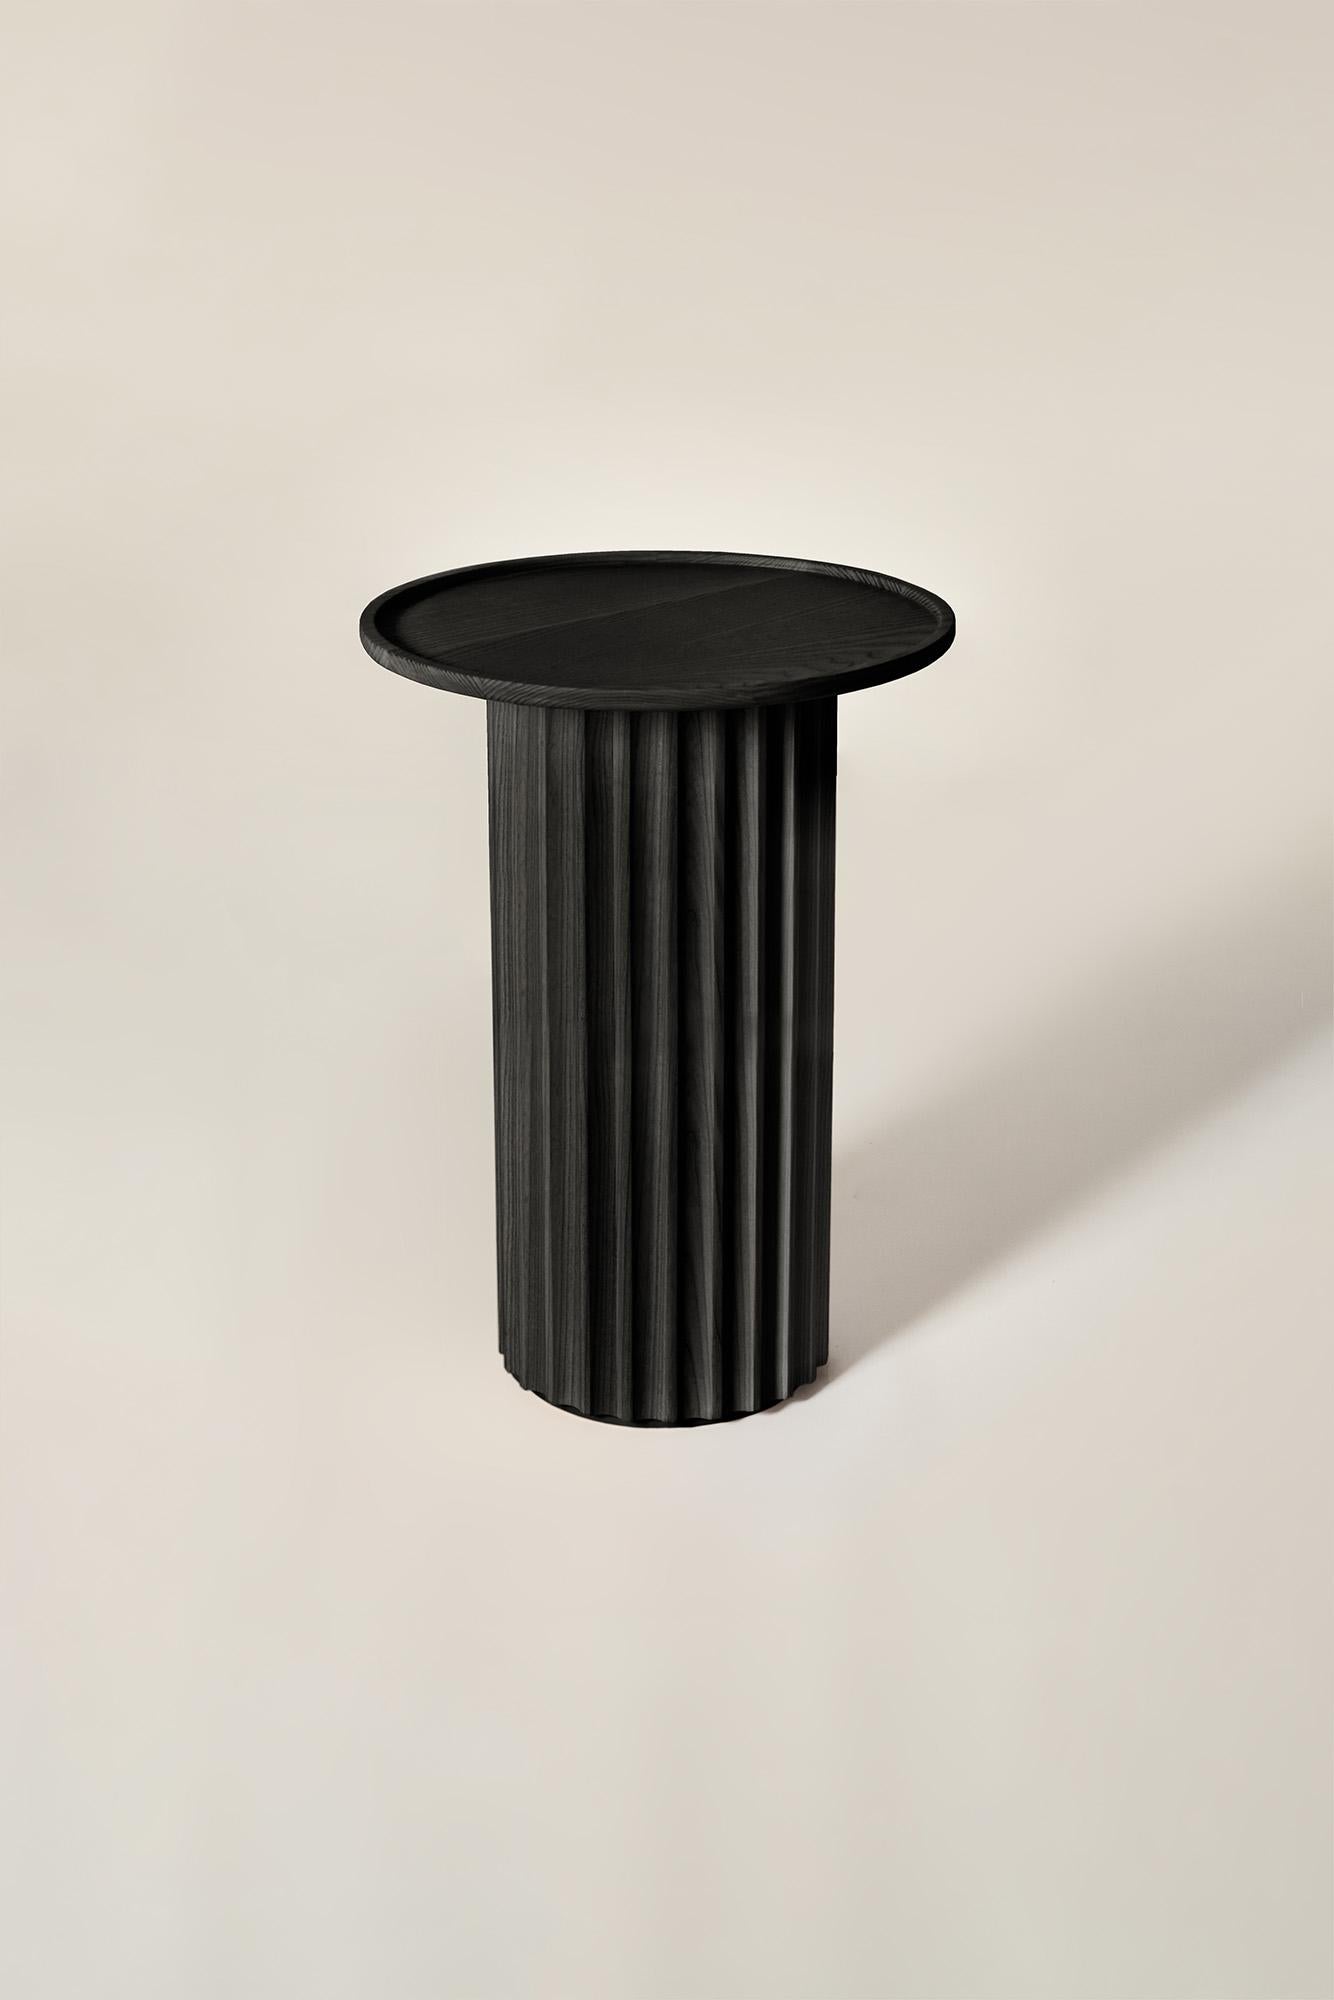 Capitello Solid Wood Coffee Table, Ash in Black Finish, Contemporary For Sale 4